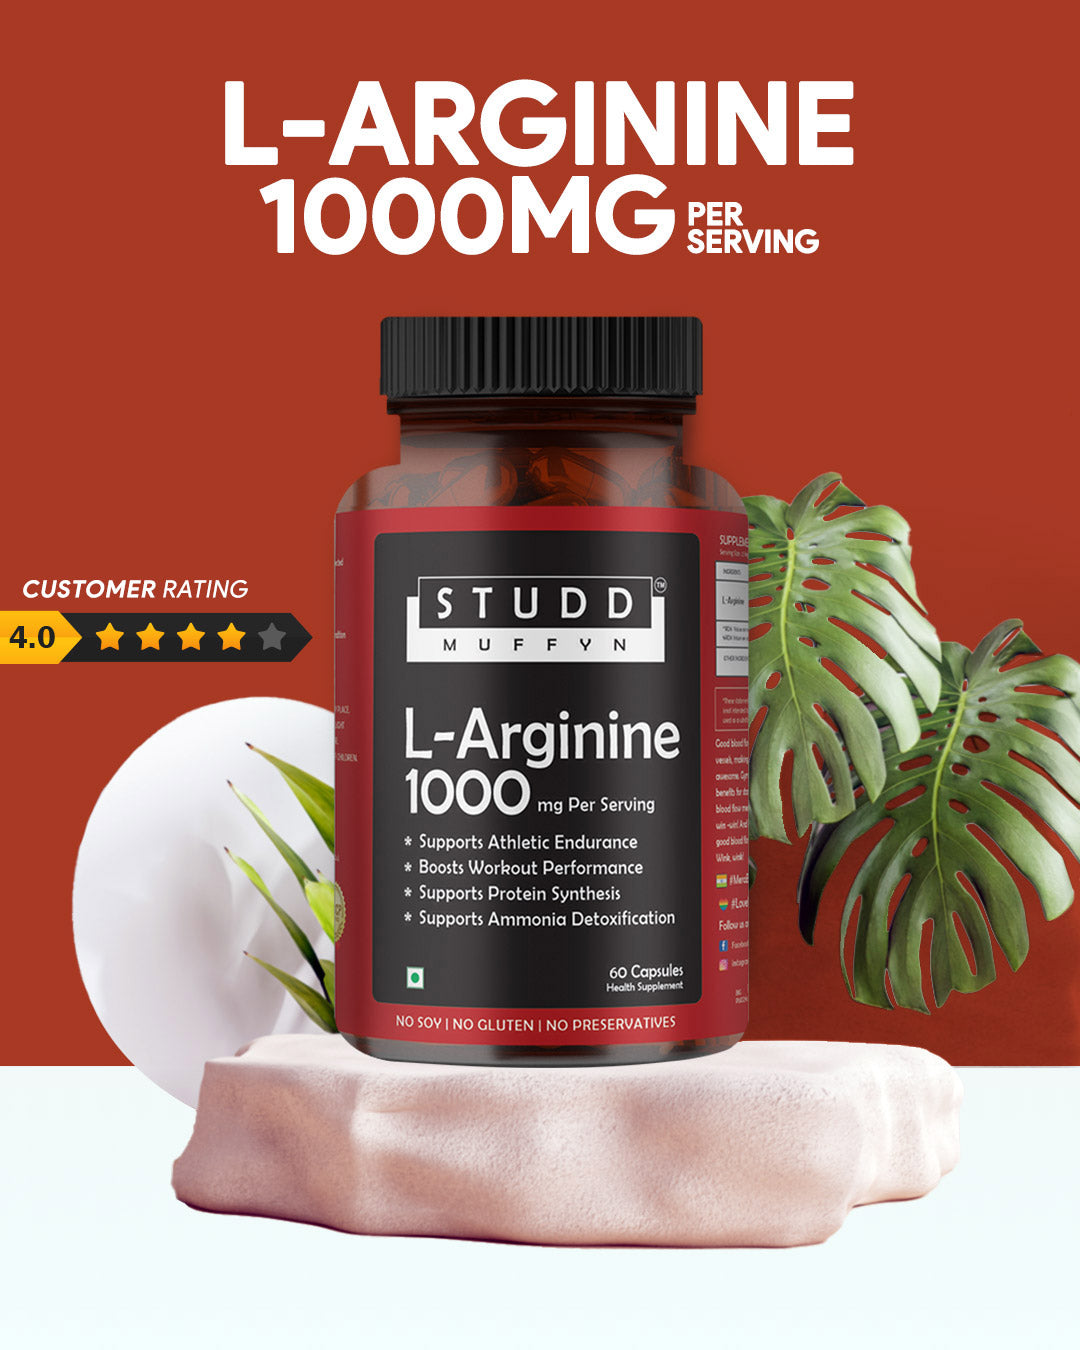 Studd Muffyn L-Arginine 1000mg- 60 Vegetarian Capsules, Endurance | Performance | Cardiovascular Health